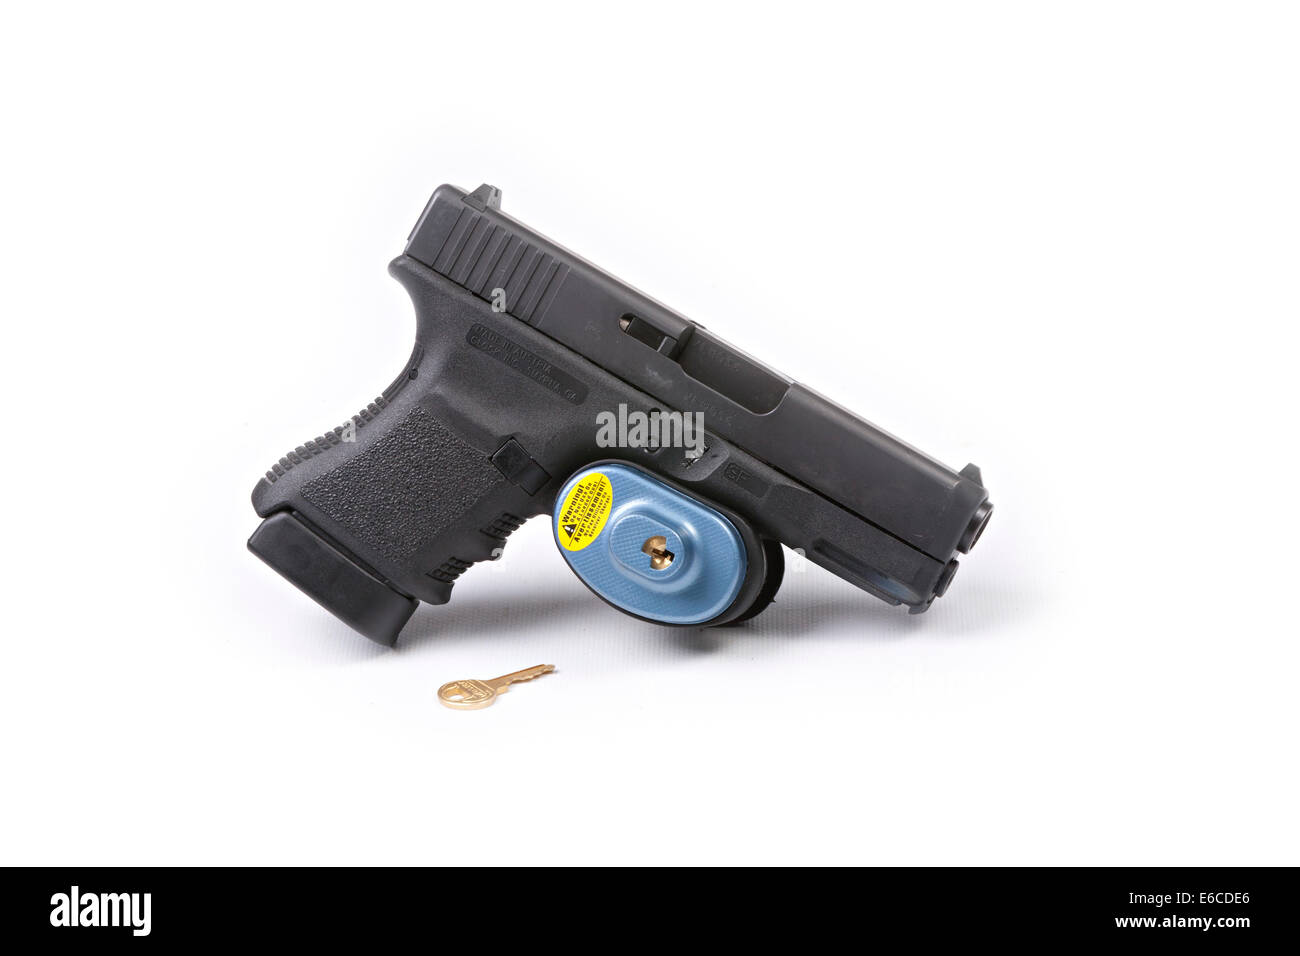 Glock pistol handgun with trigger lock installed isolated on white background Stock Photo